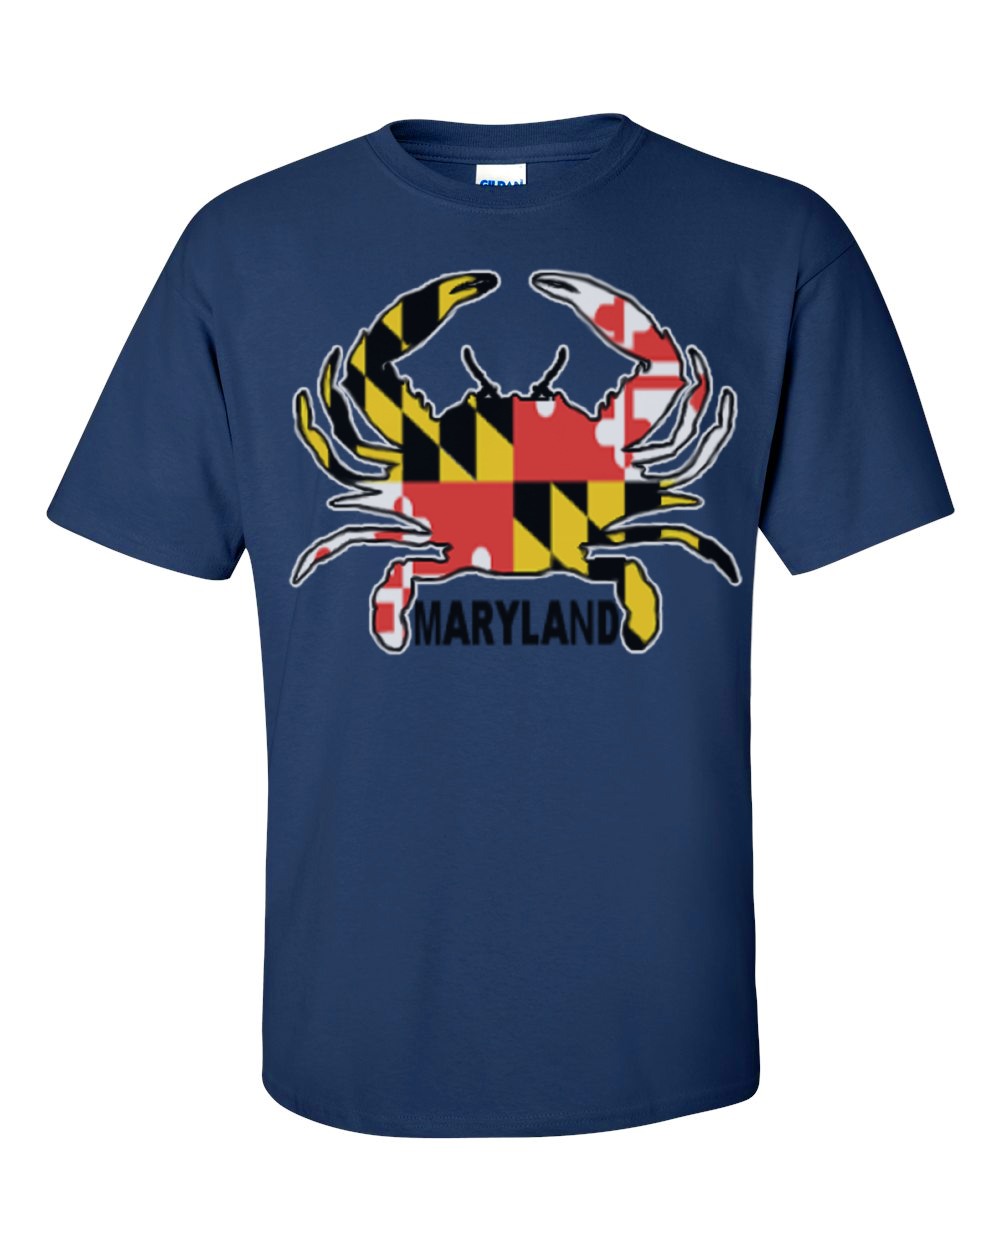 Maryland Crab Big Crab T-Shirt (Navy Blue)